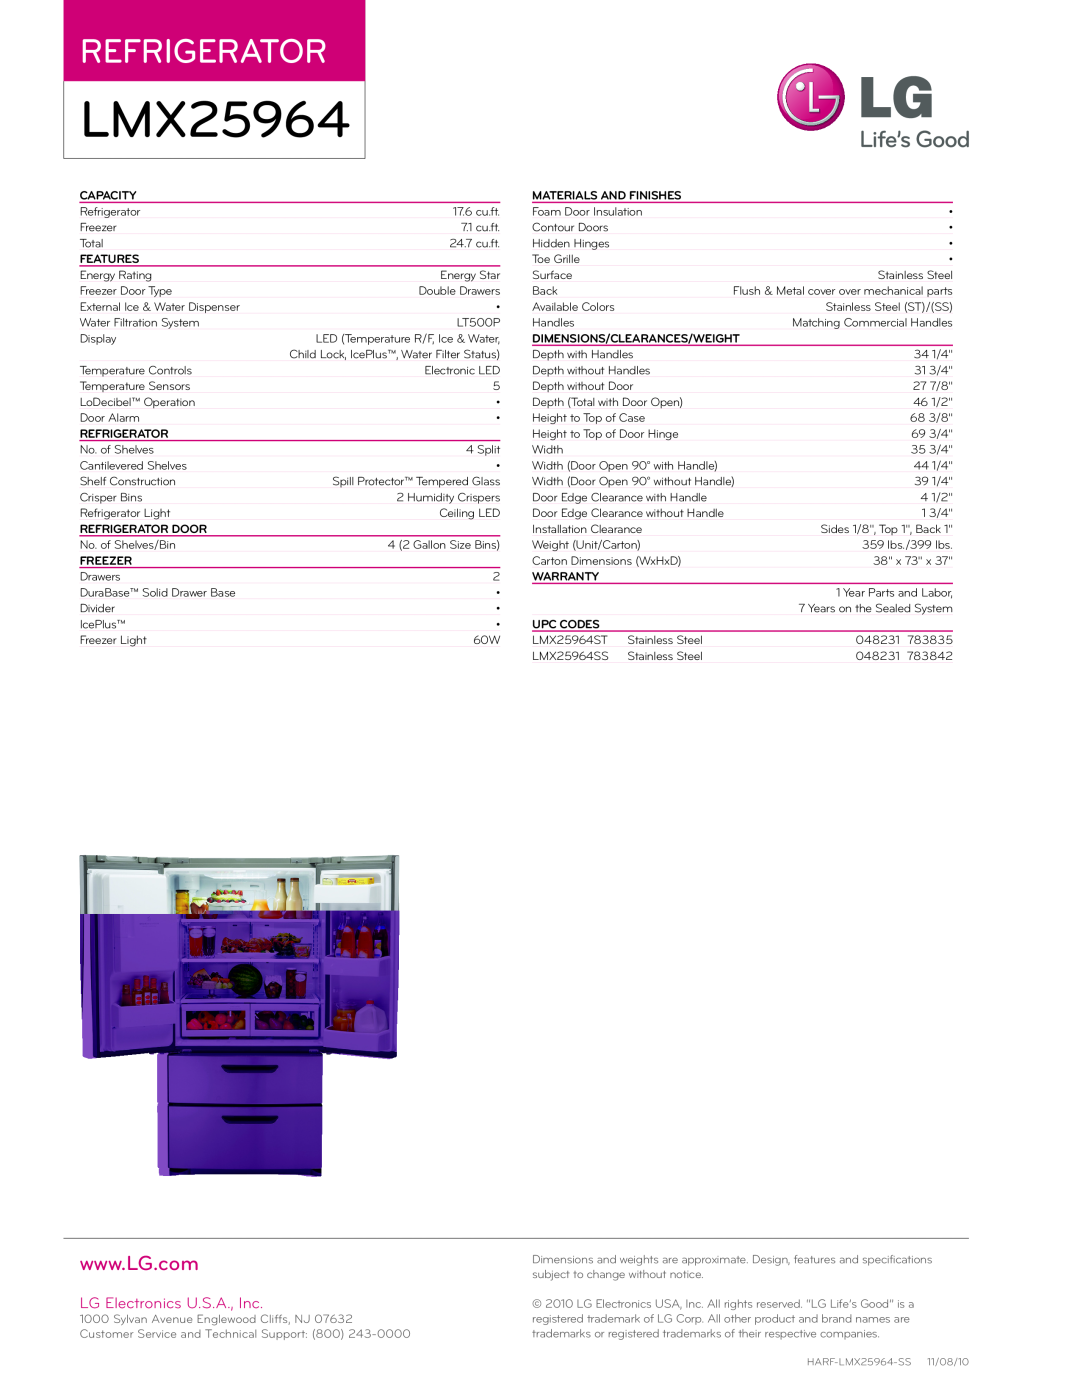 LG Electronics LMX25964 manual LG Electronics U.S.A., Inc, Capacity, Features, Refrigerator Door, Freezer, Warranty 